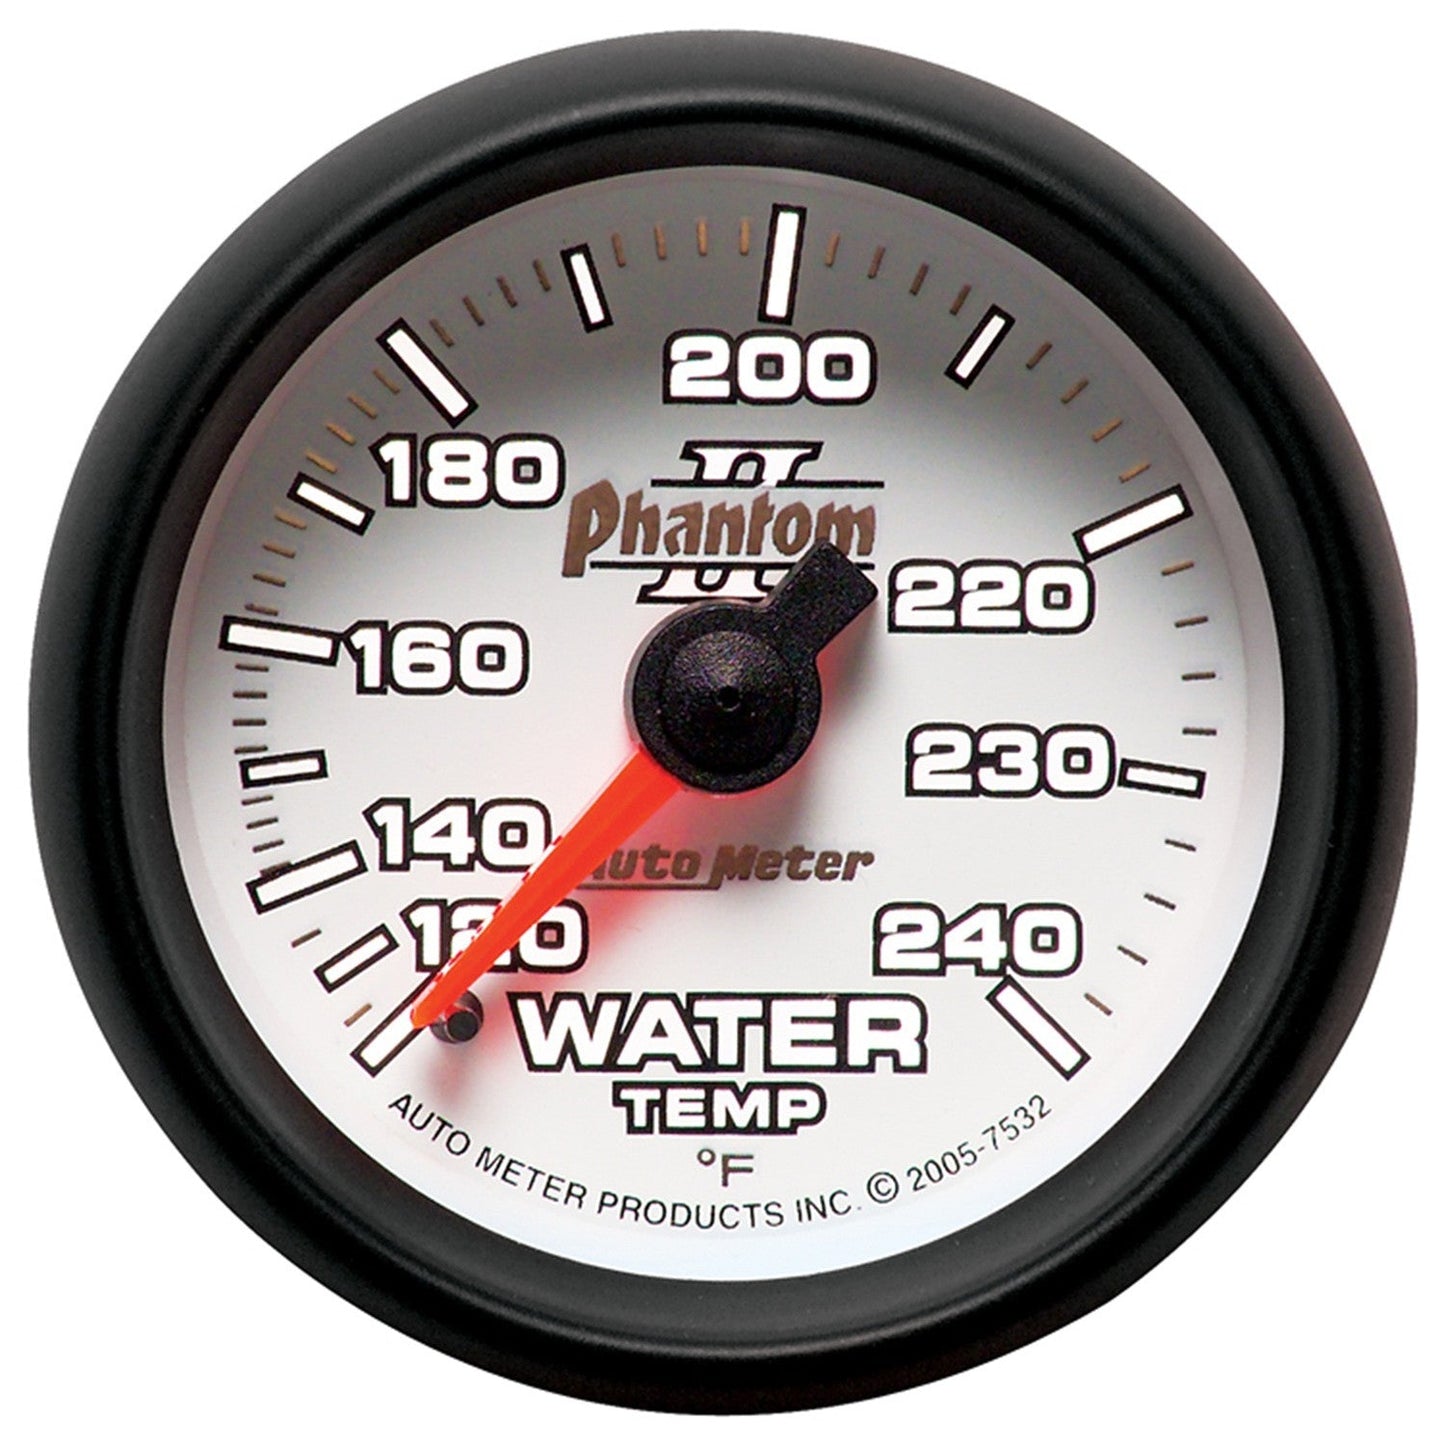 AutoMeter - 2-1/16" WATER TEMPERATURE, 120-240 °F, 6 FT., MECHANICAL, PHANTOM II (7532)